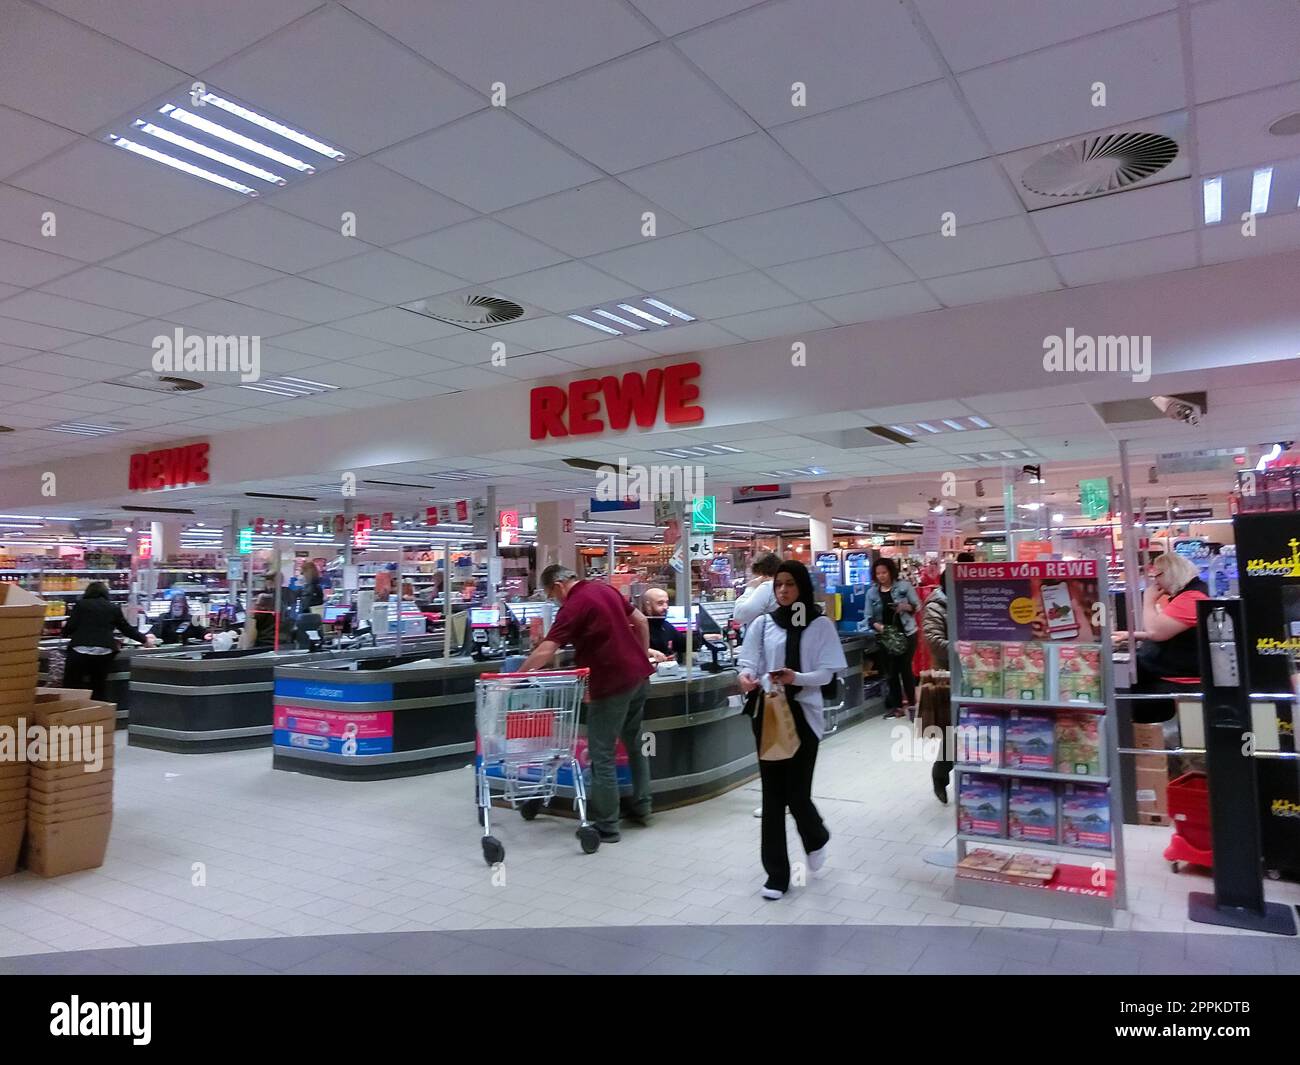 REWE supermarket in Neu-Isenburg, Germany. Stock Photo